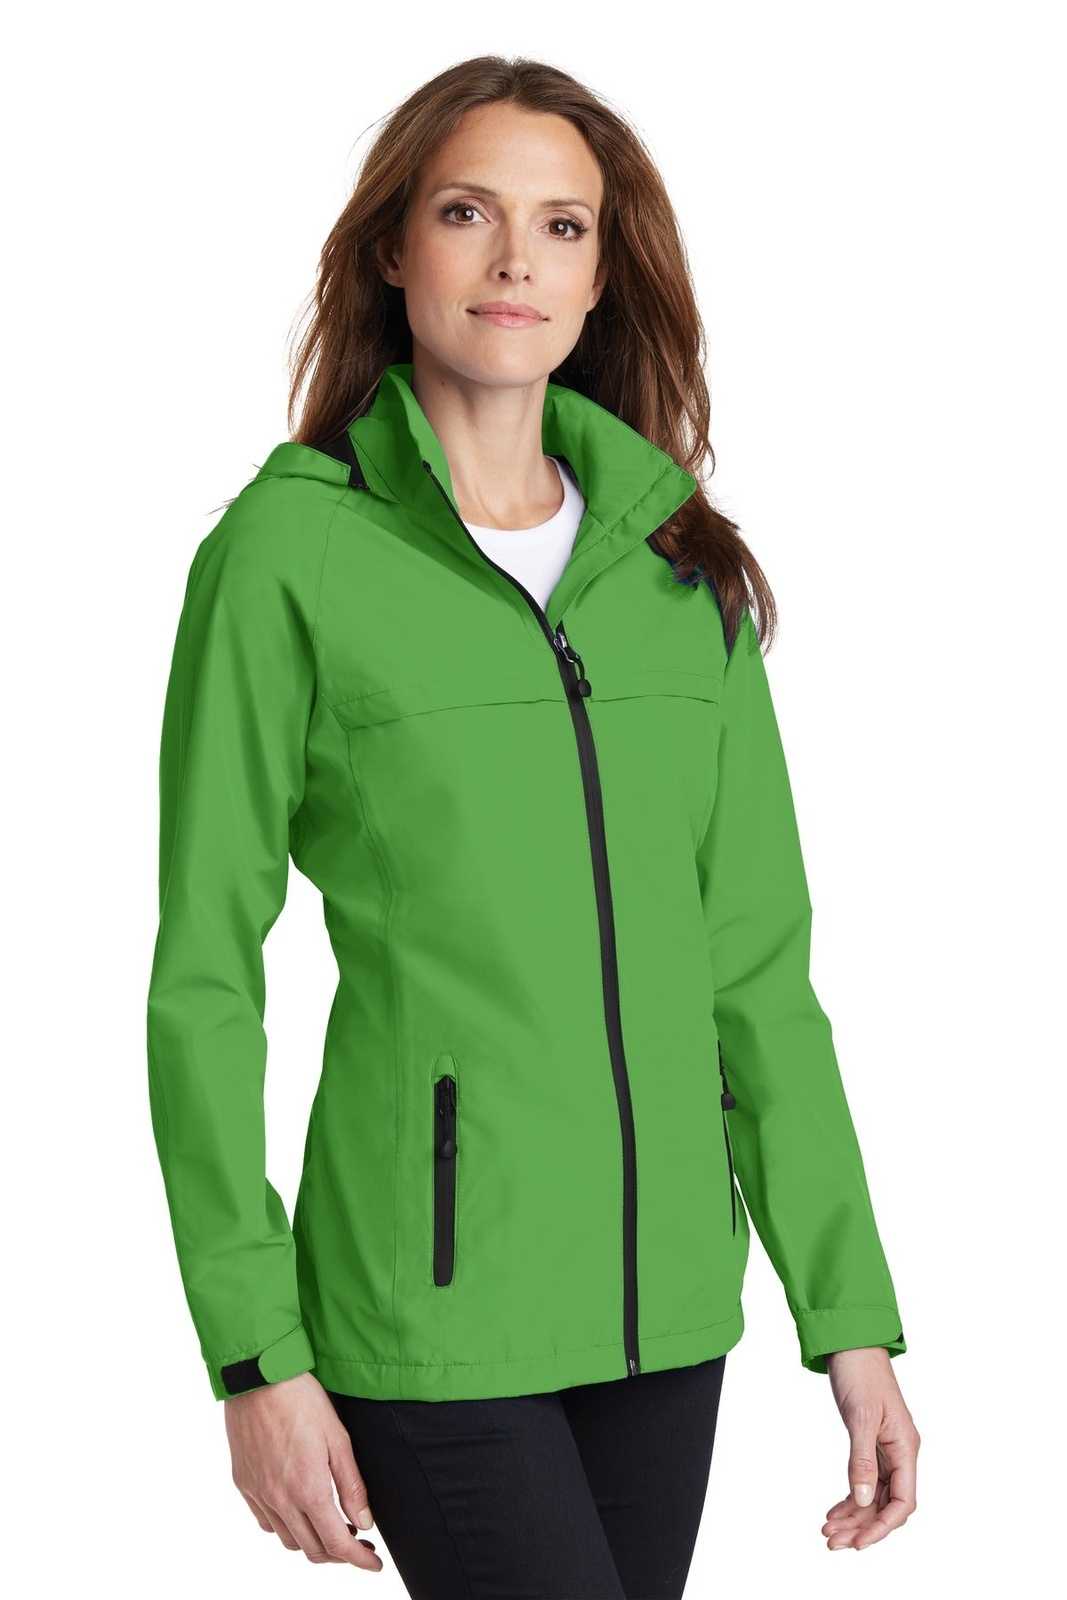 Port Authority L333 Ladies Torrent Waterproof Jacket - Vine Green - HIT a Double - 4